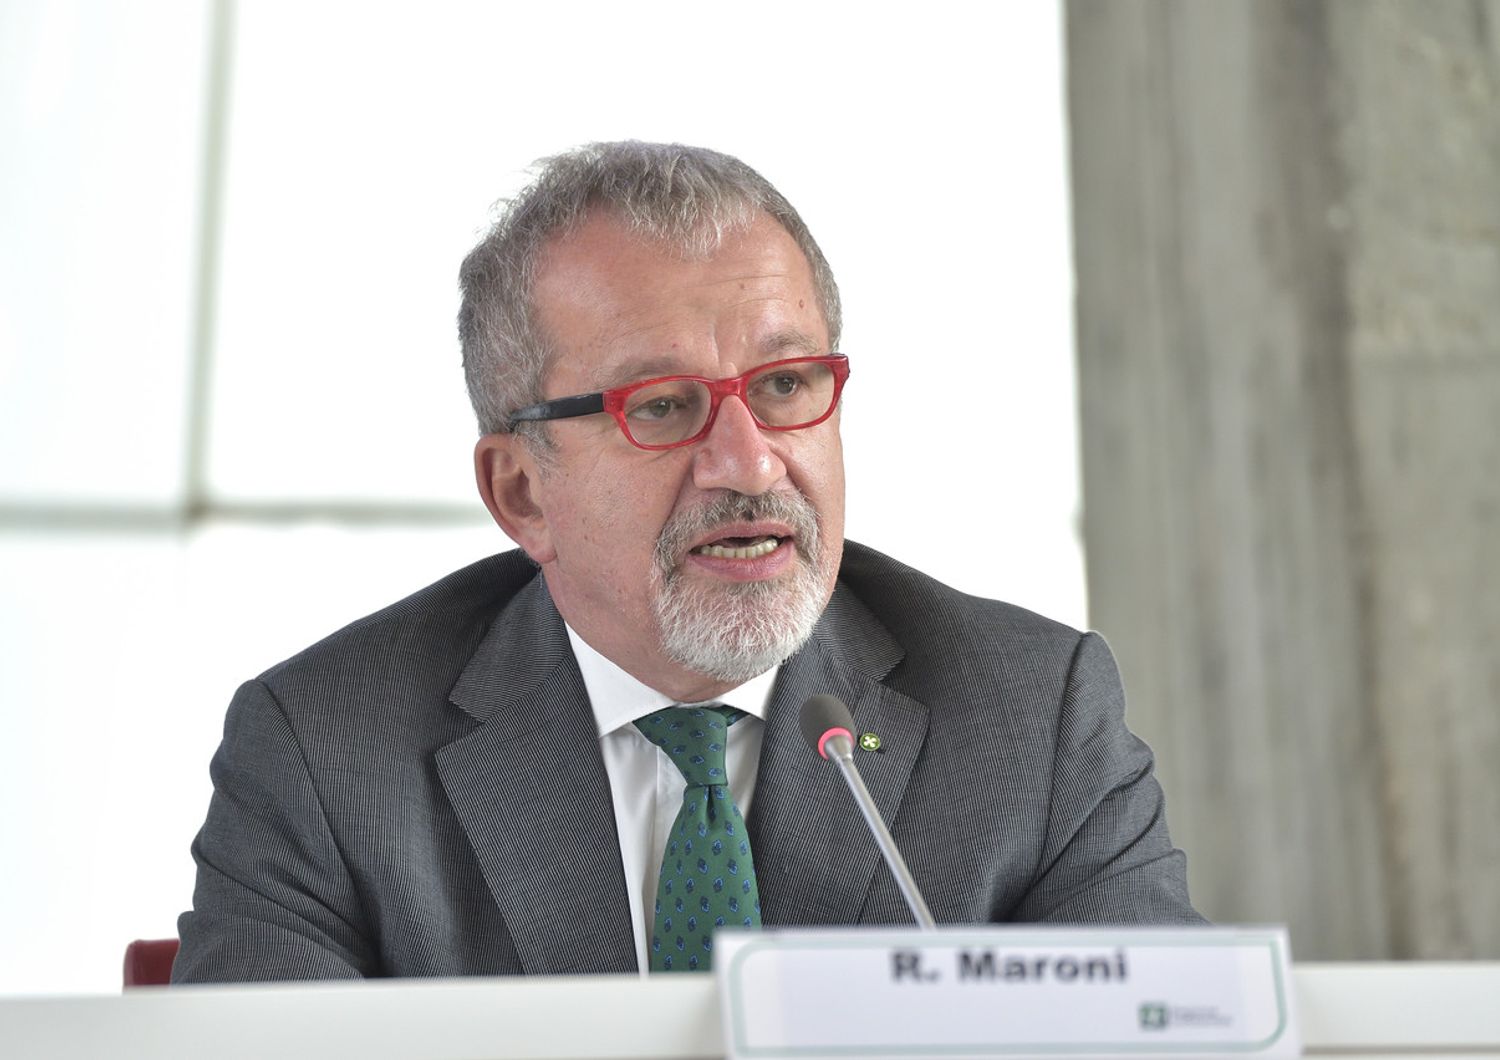 Roberto Maroni